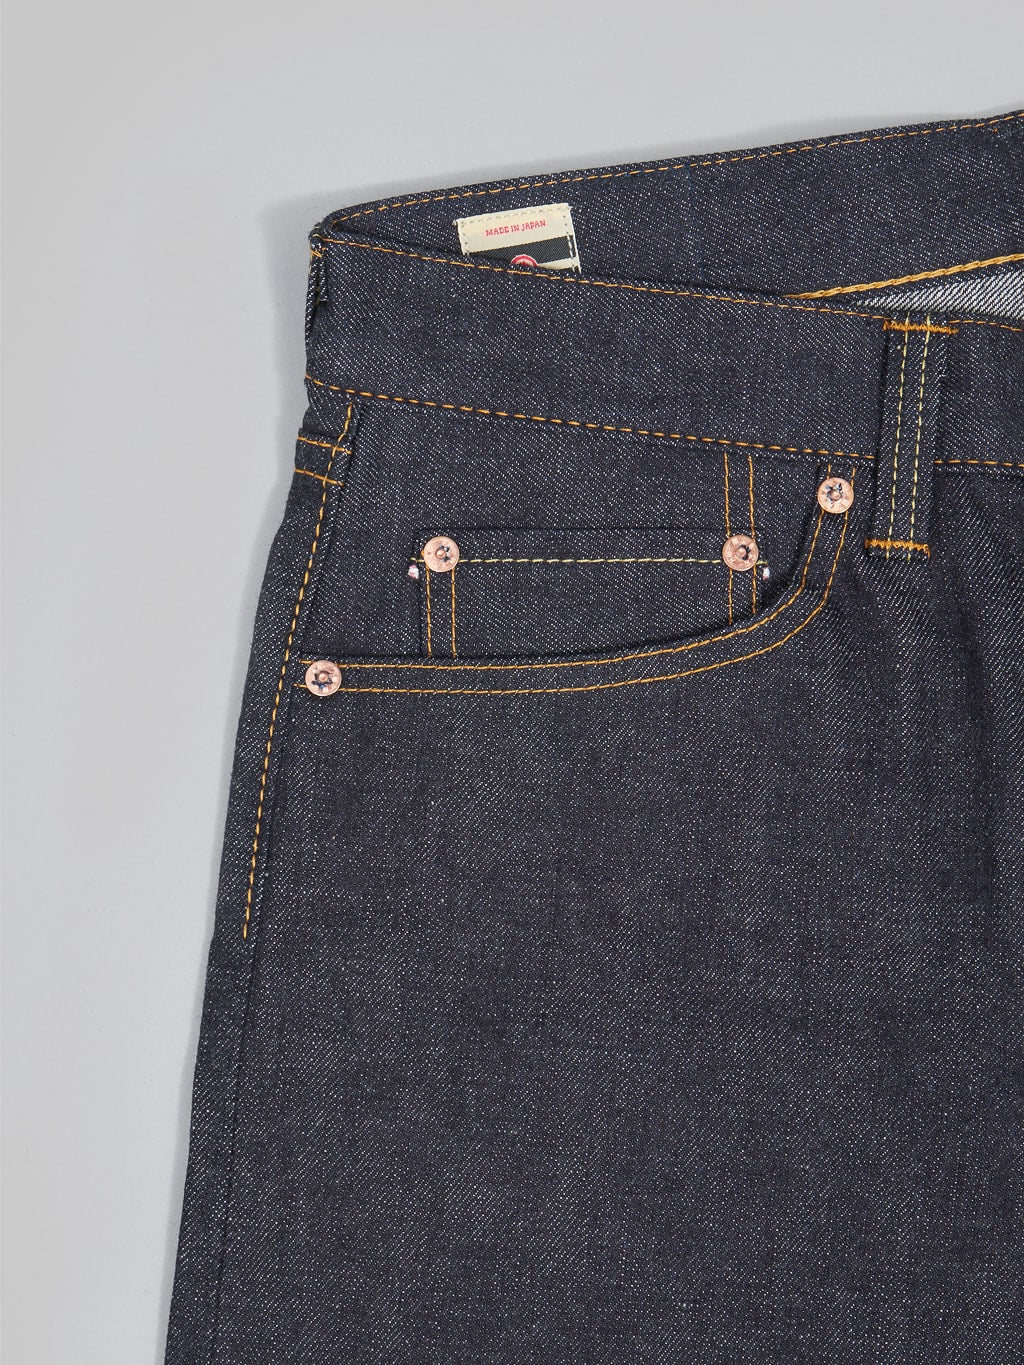 momotaro 0605 13 indigo jeans natural tapered 13oz coin pocket